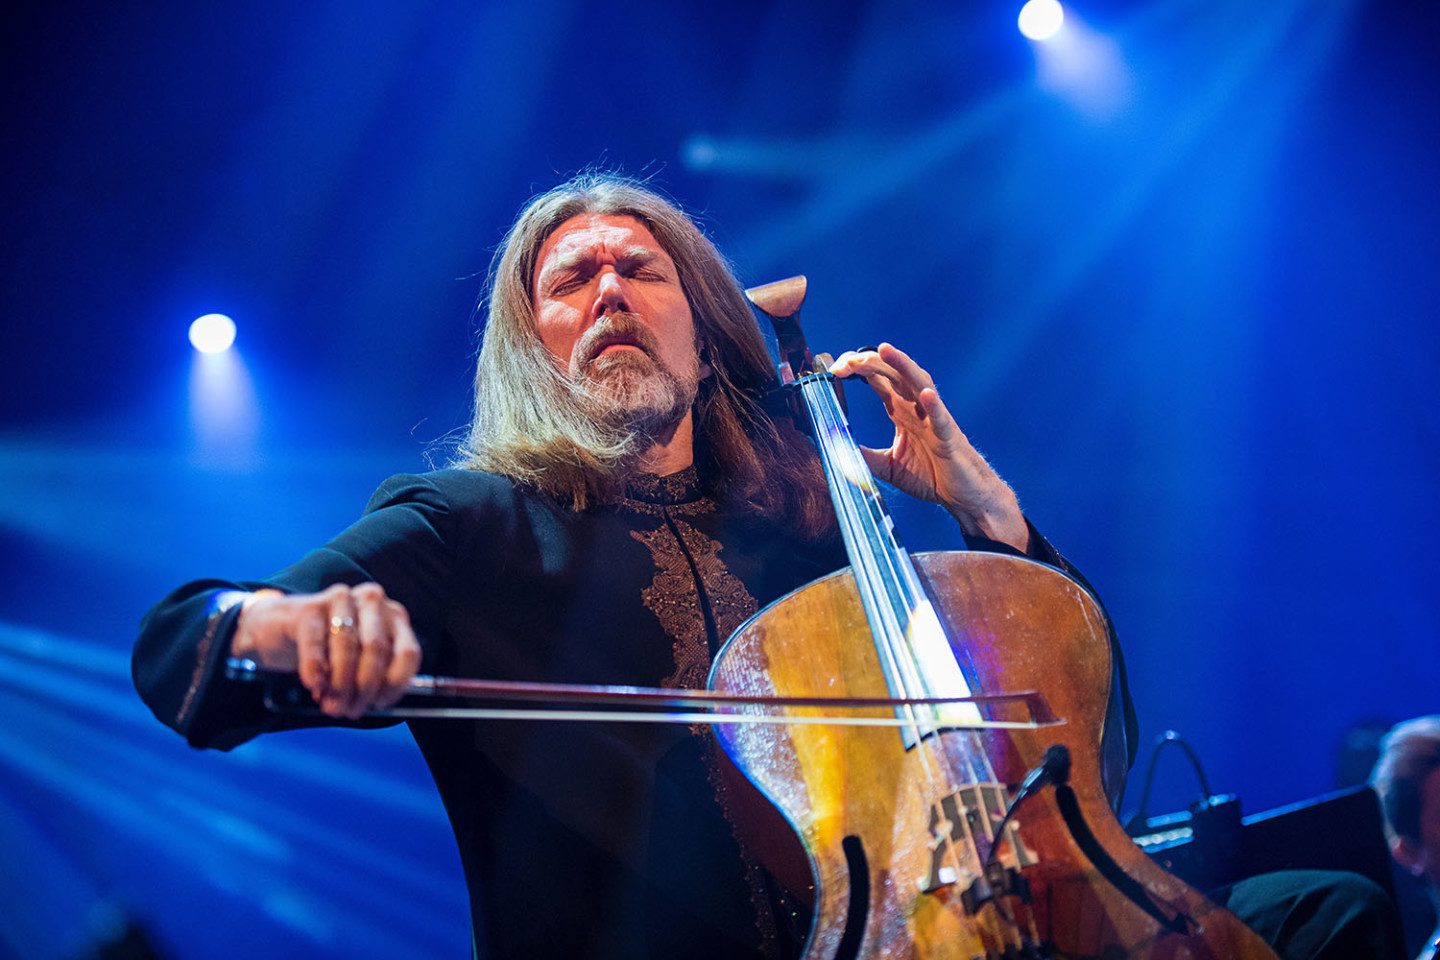 Musician Svante Henryson plays the cello during a concert, blue background